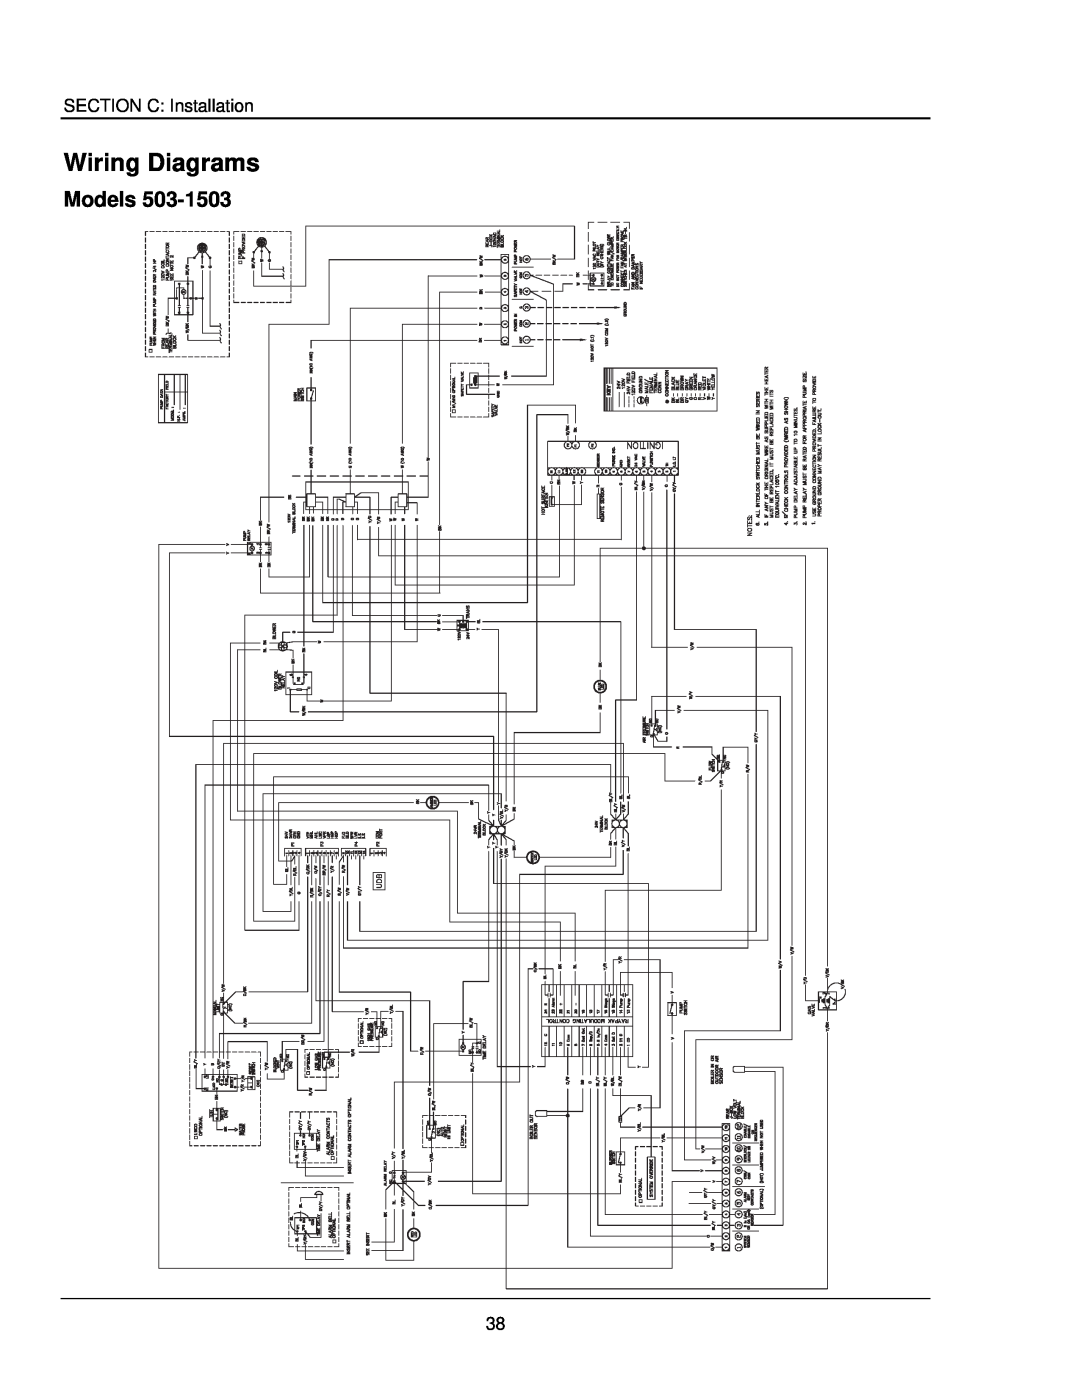 Raypak 503-2003 manual Wiring Diagrams, Models, SECTION C Installation 